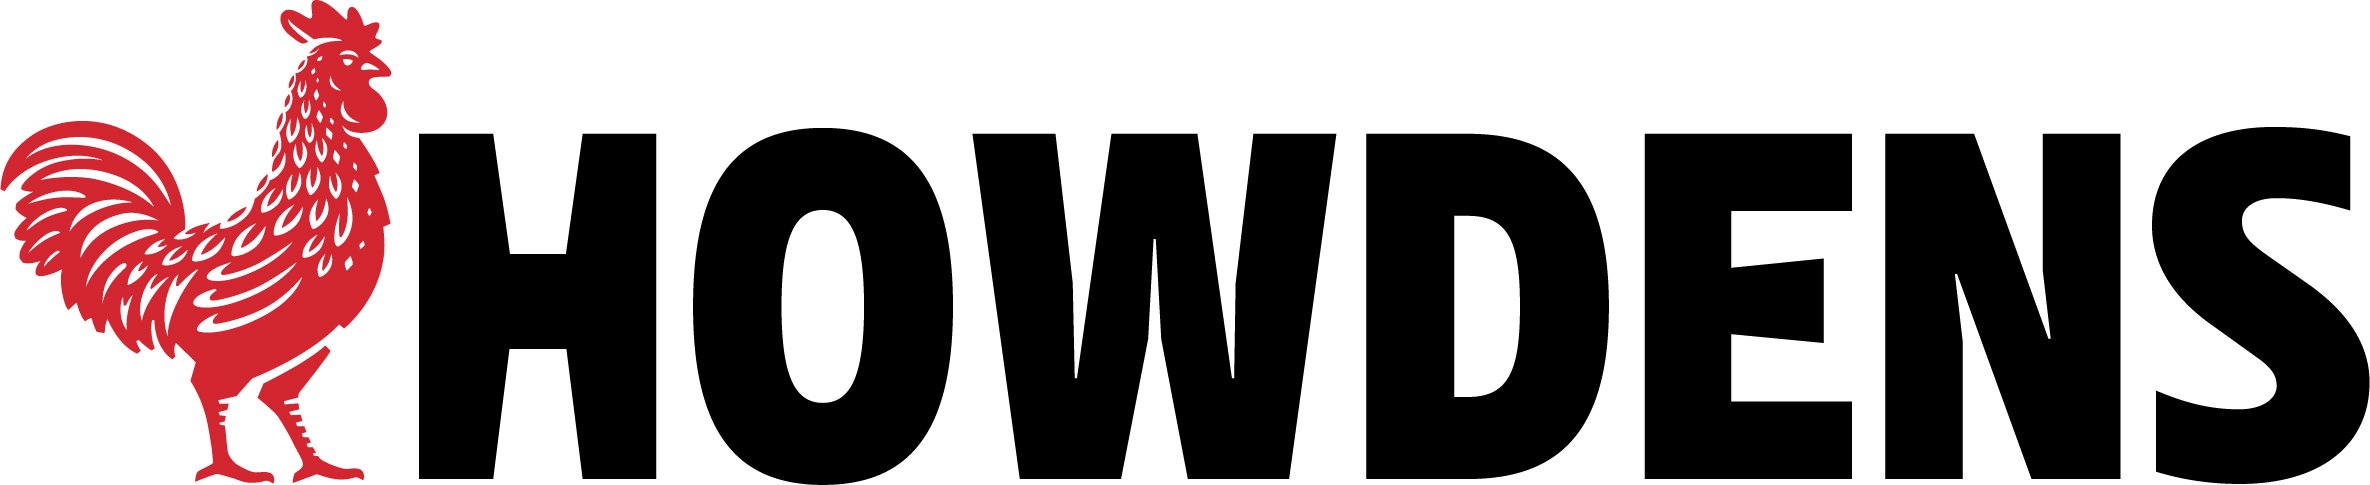 howdens-2019-logo-red-rooster-black-text-horizontal_rgb.jpg